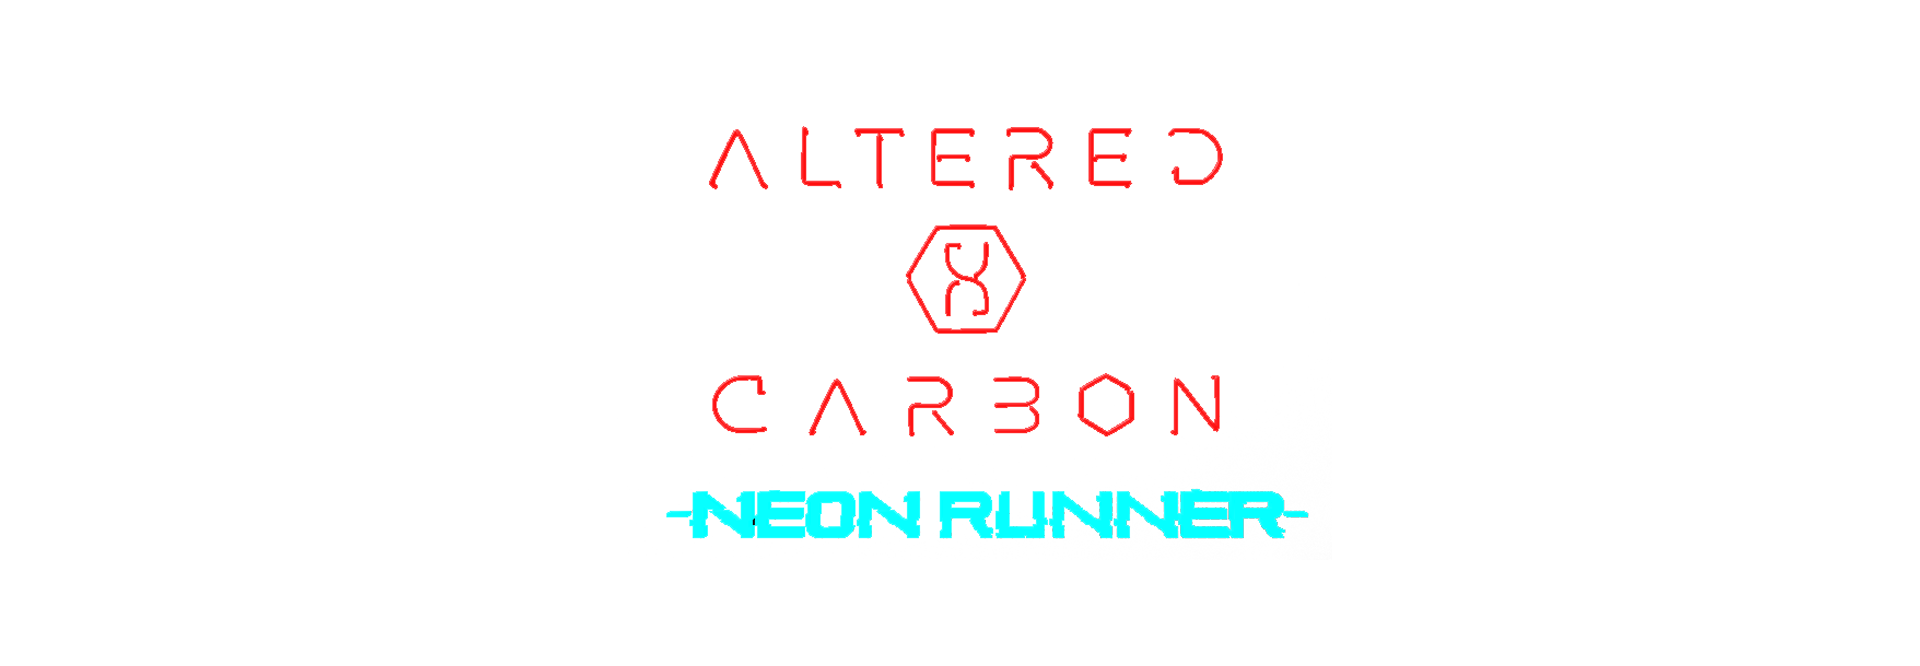 Altered Carbon: Neon Runner